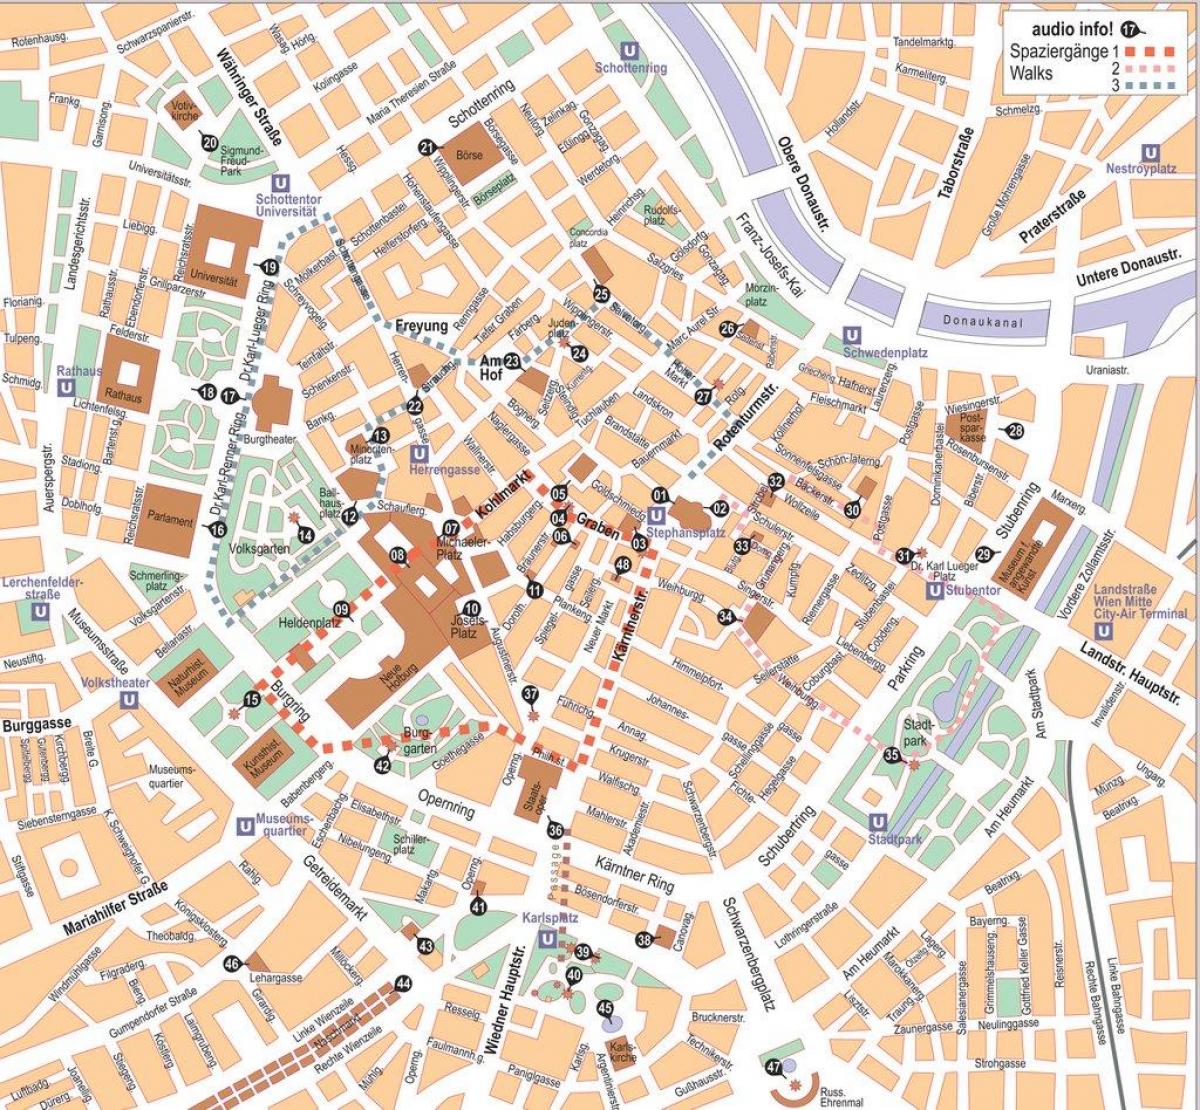 Harta Vienei de oraș offline